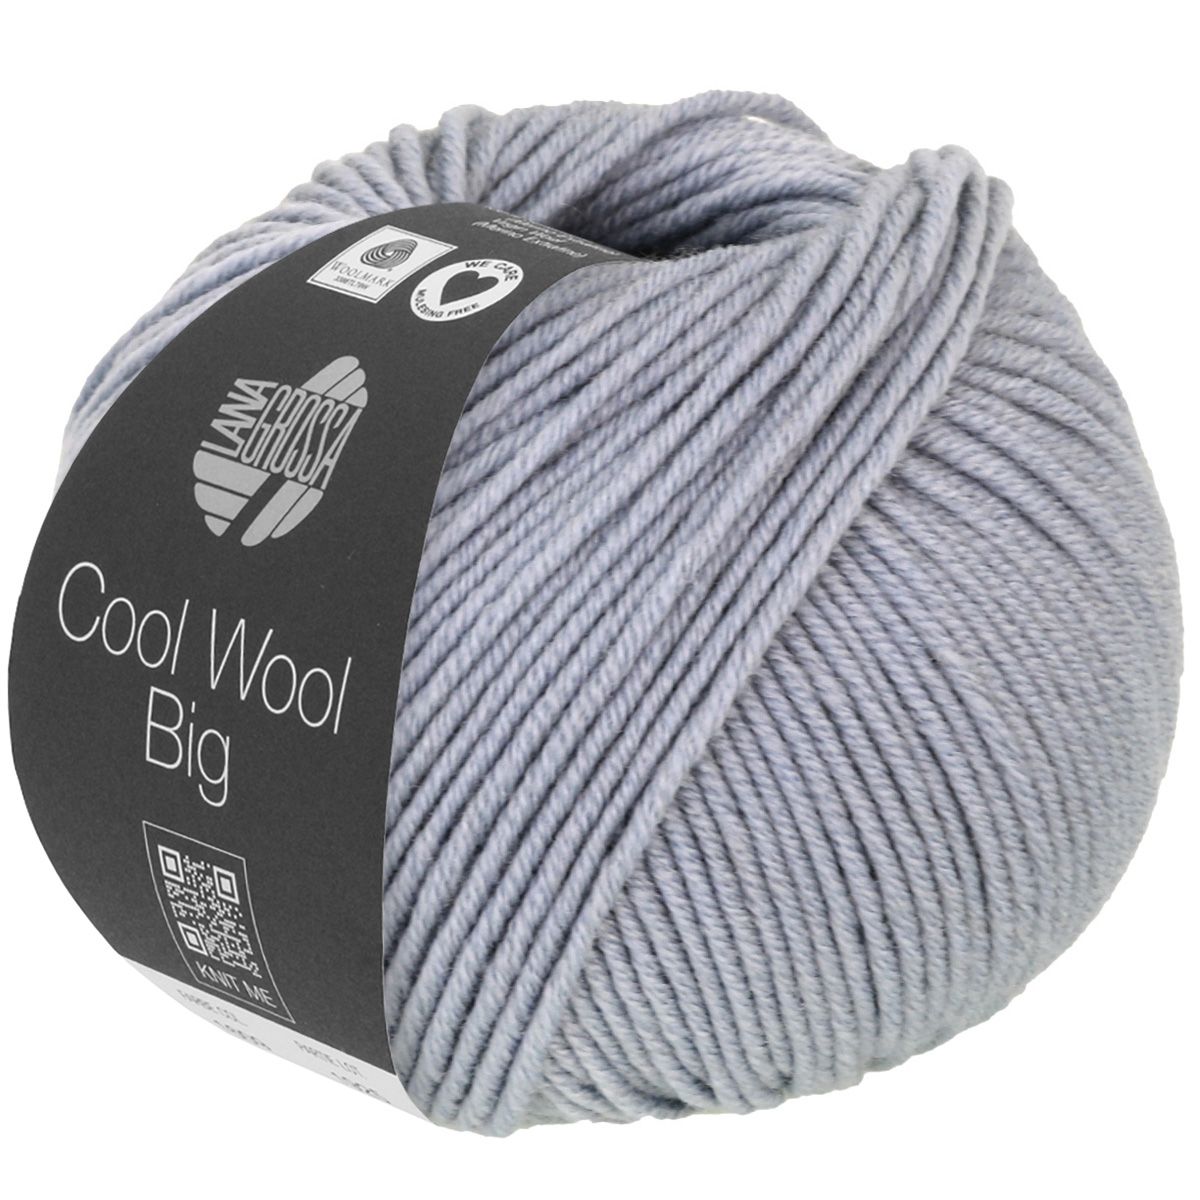 Lana Grossa Cool Wool Big kleur 1019